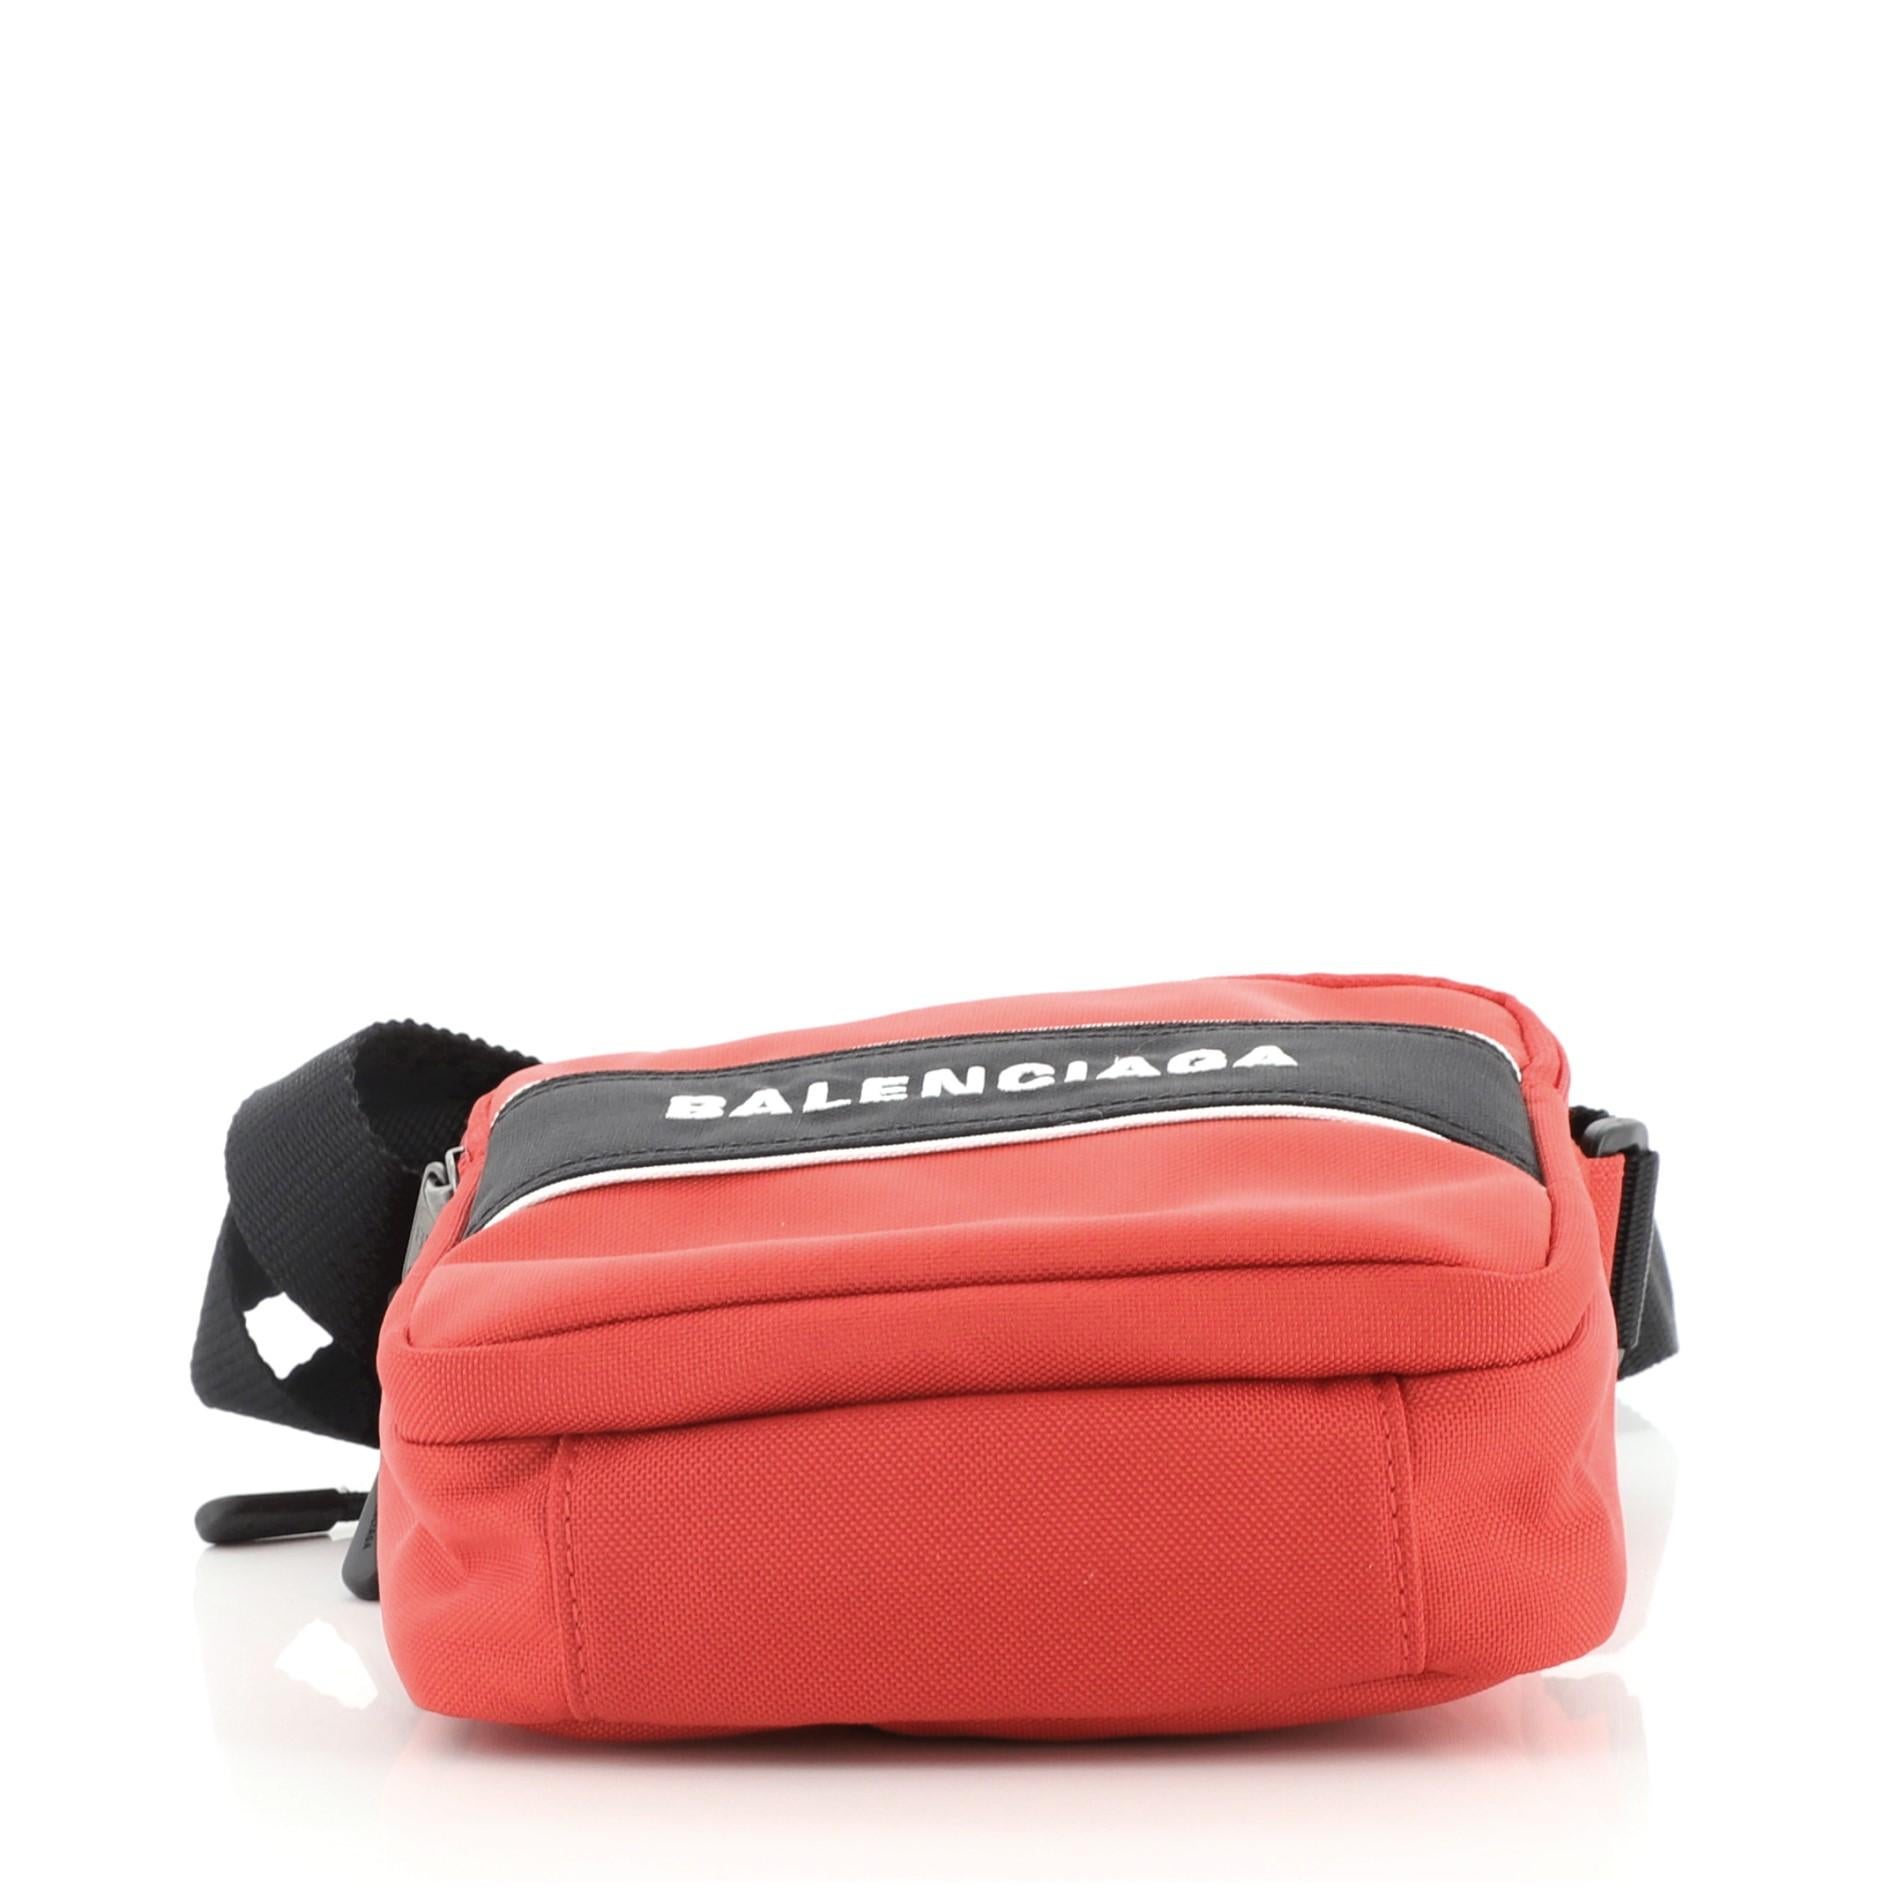 Red Balenciaga Sports Messenger Bag Nylon Small